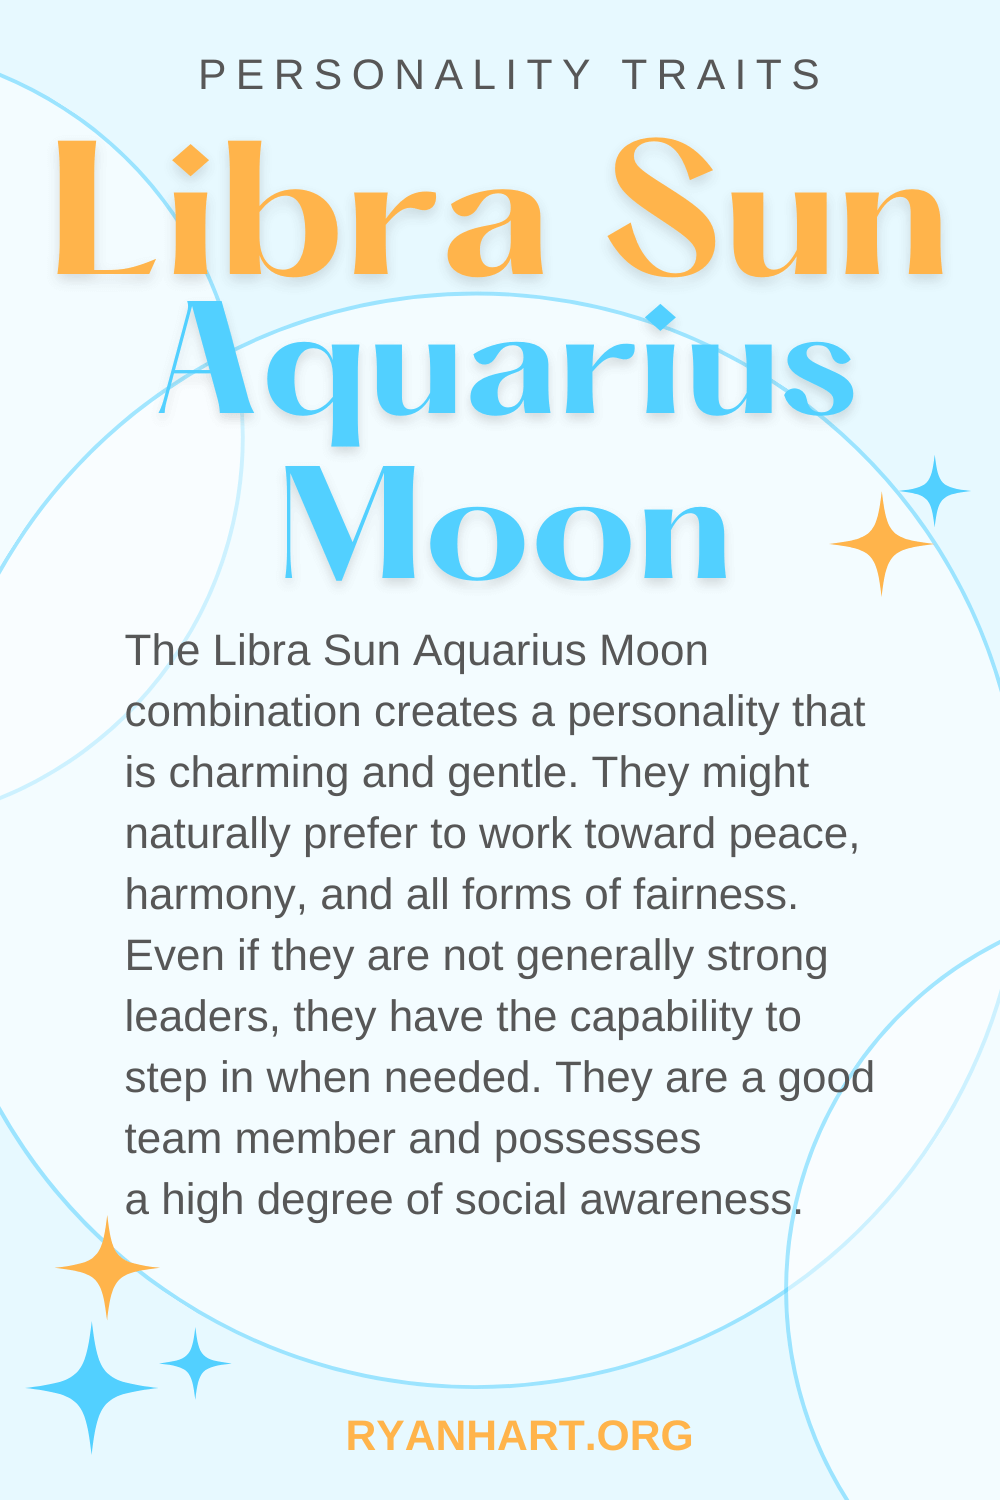  Ciri-ciri Kepribadian Matahari Libra Bulan Aquarius